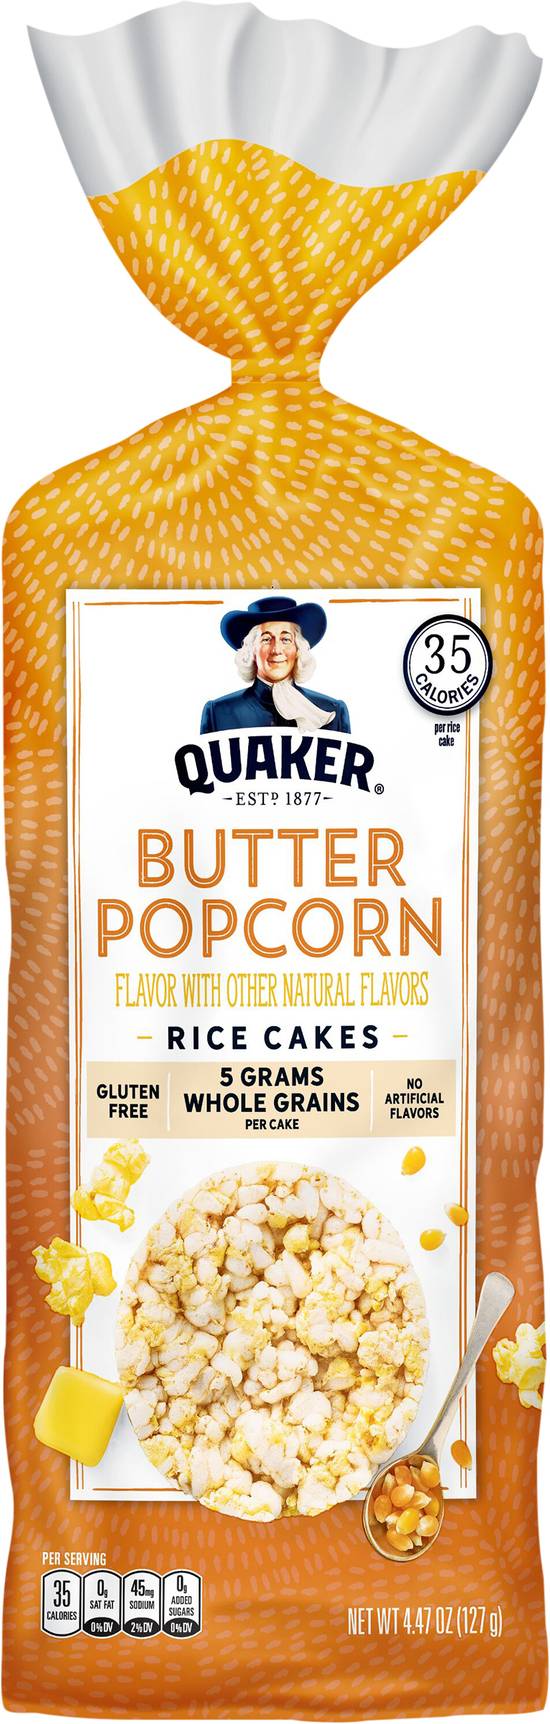 Quaker Gluten Free Rice Cakes (butter popcorn)